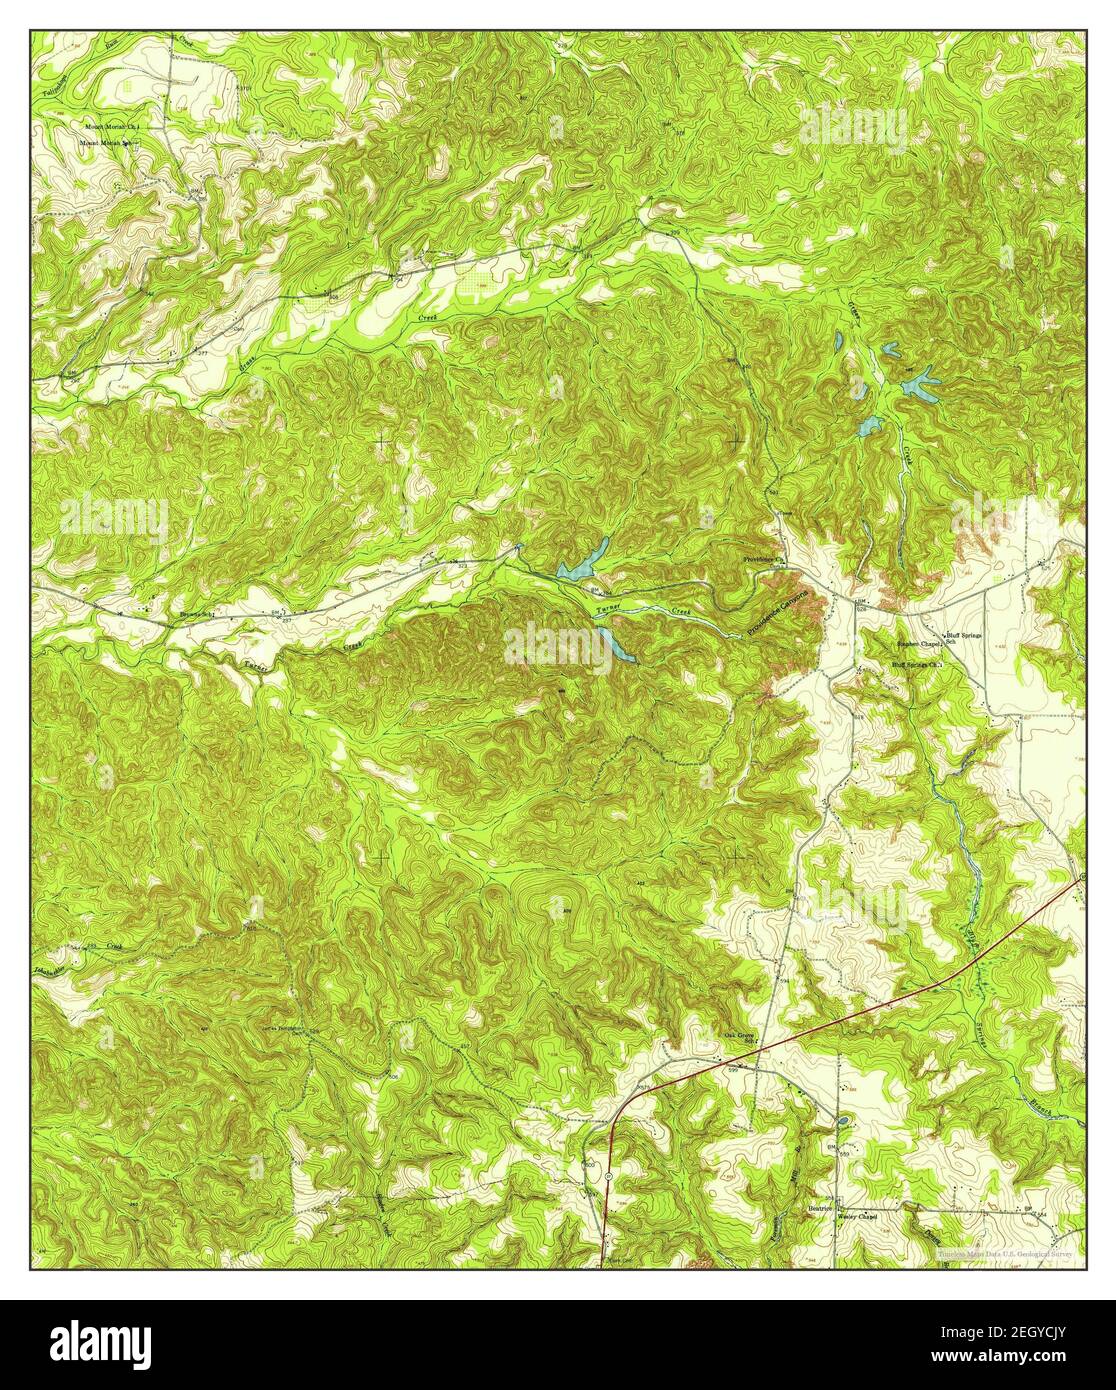 Lumpkin SW, Georgia, map 1950, 1:24000, United States of America by Timeless Maps, data U.S. Geological Survey Stock Photo